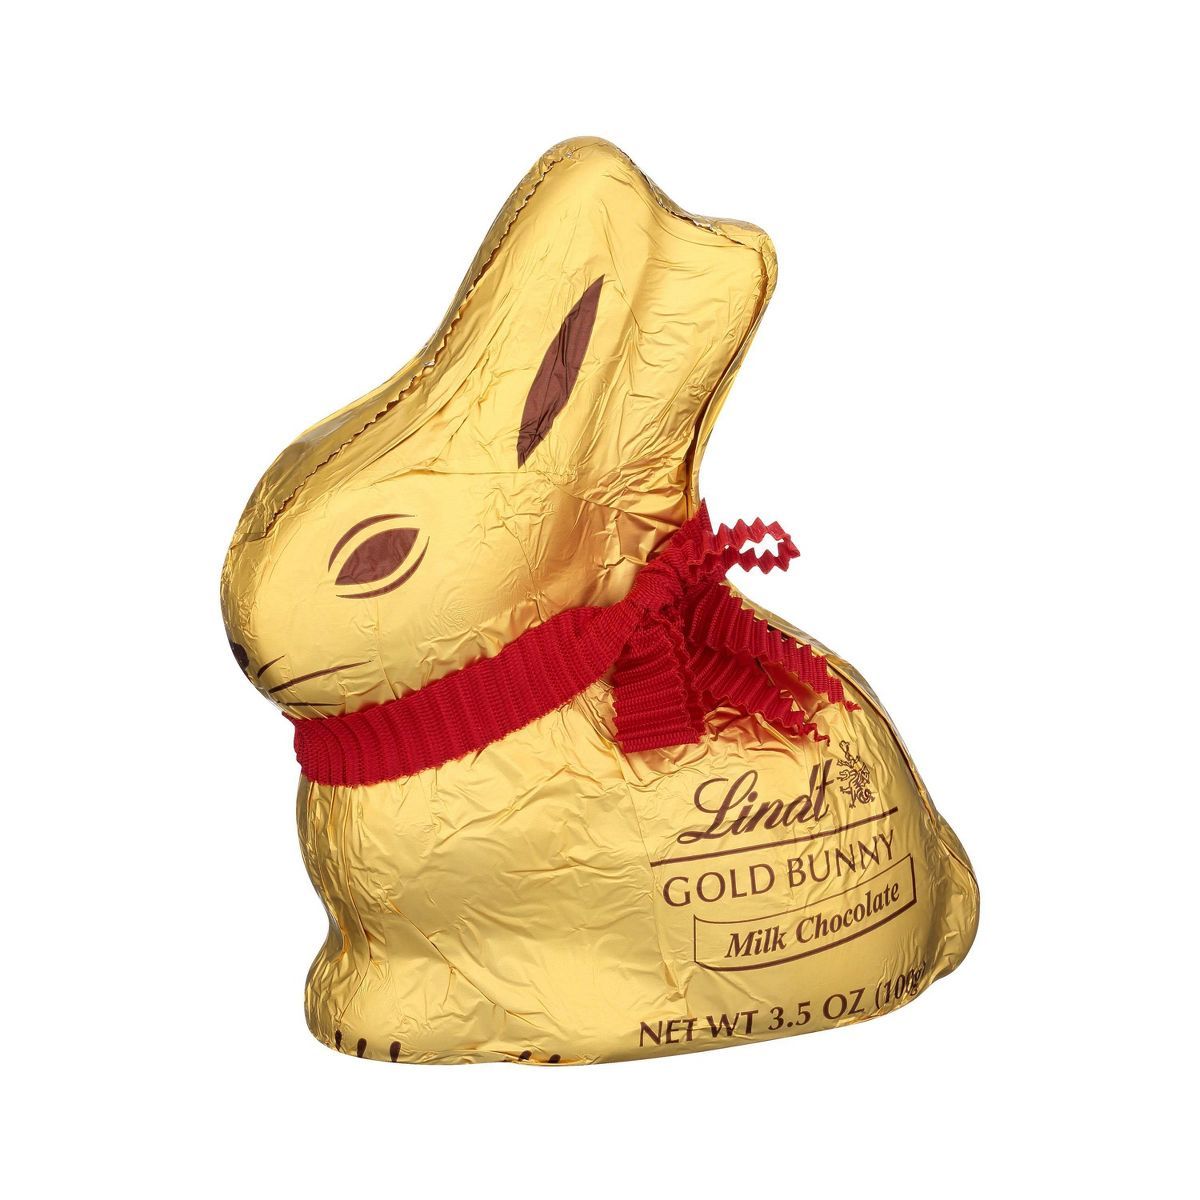 Lindt Easter Milk Chocolate Gold Bunny - 3.5oz | Target